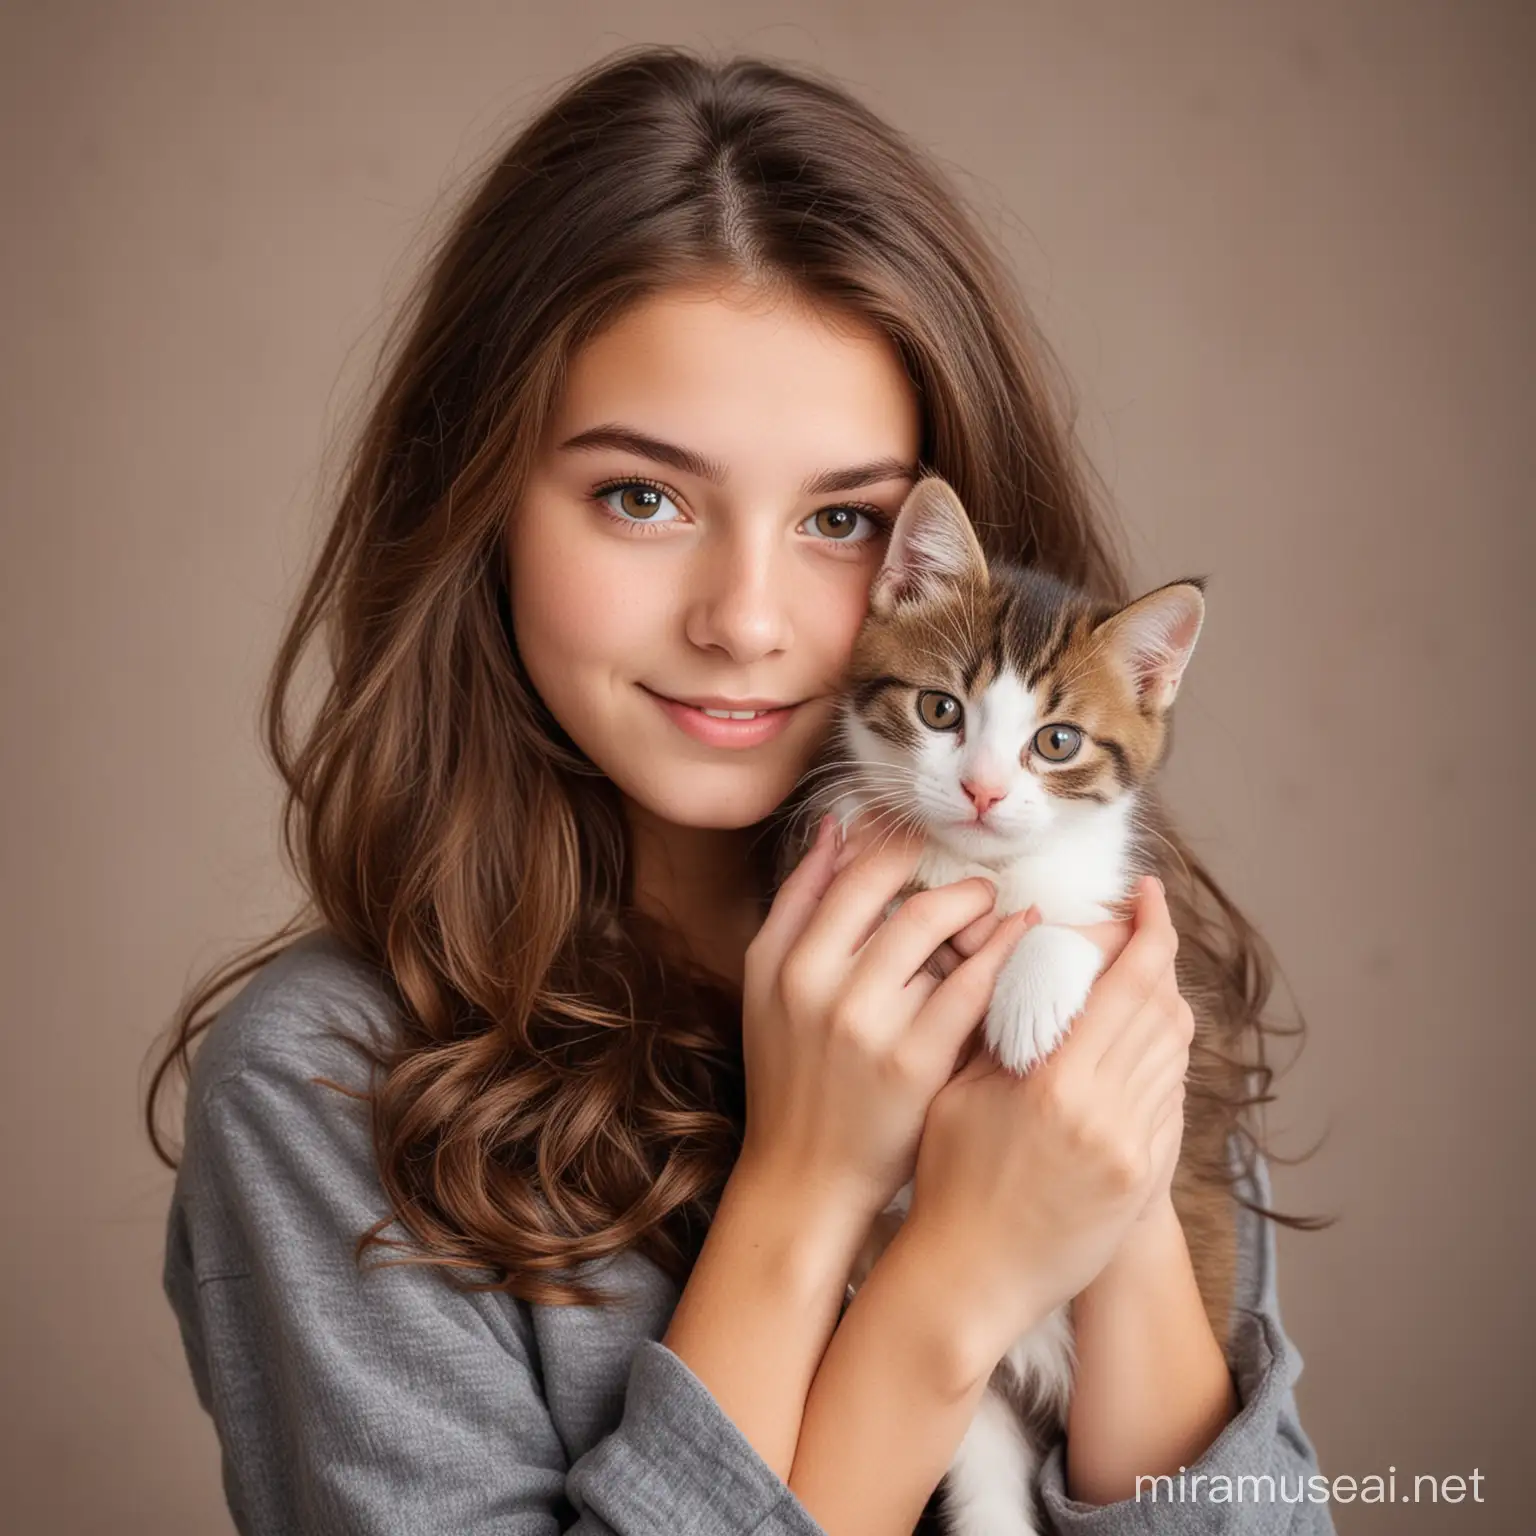 Adorable BrownHaired Teenage Girl Cuddling a Playful Kitten